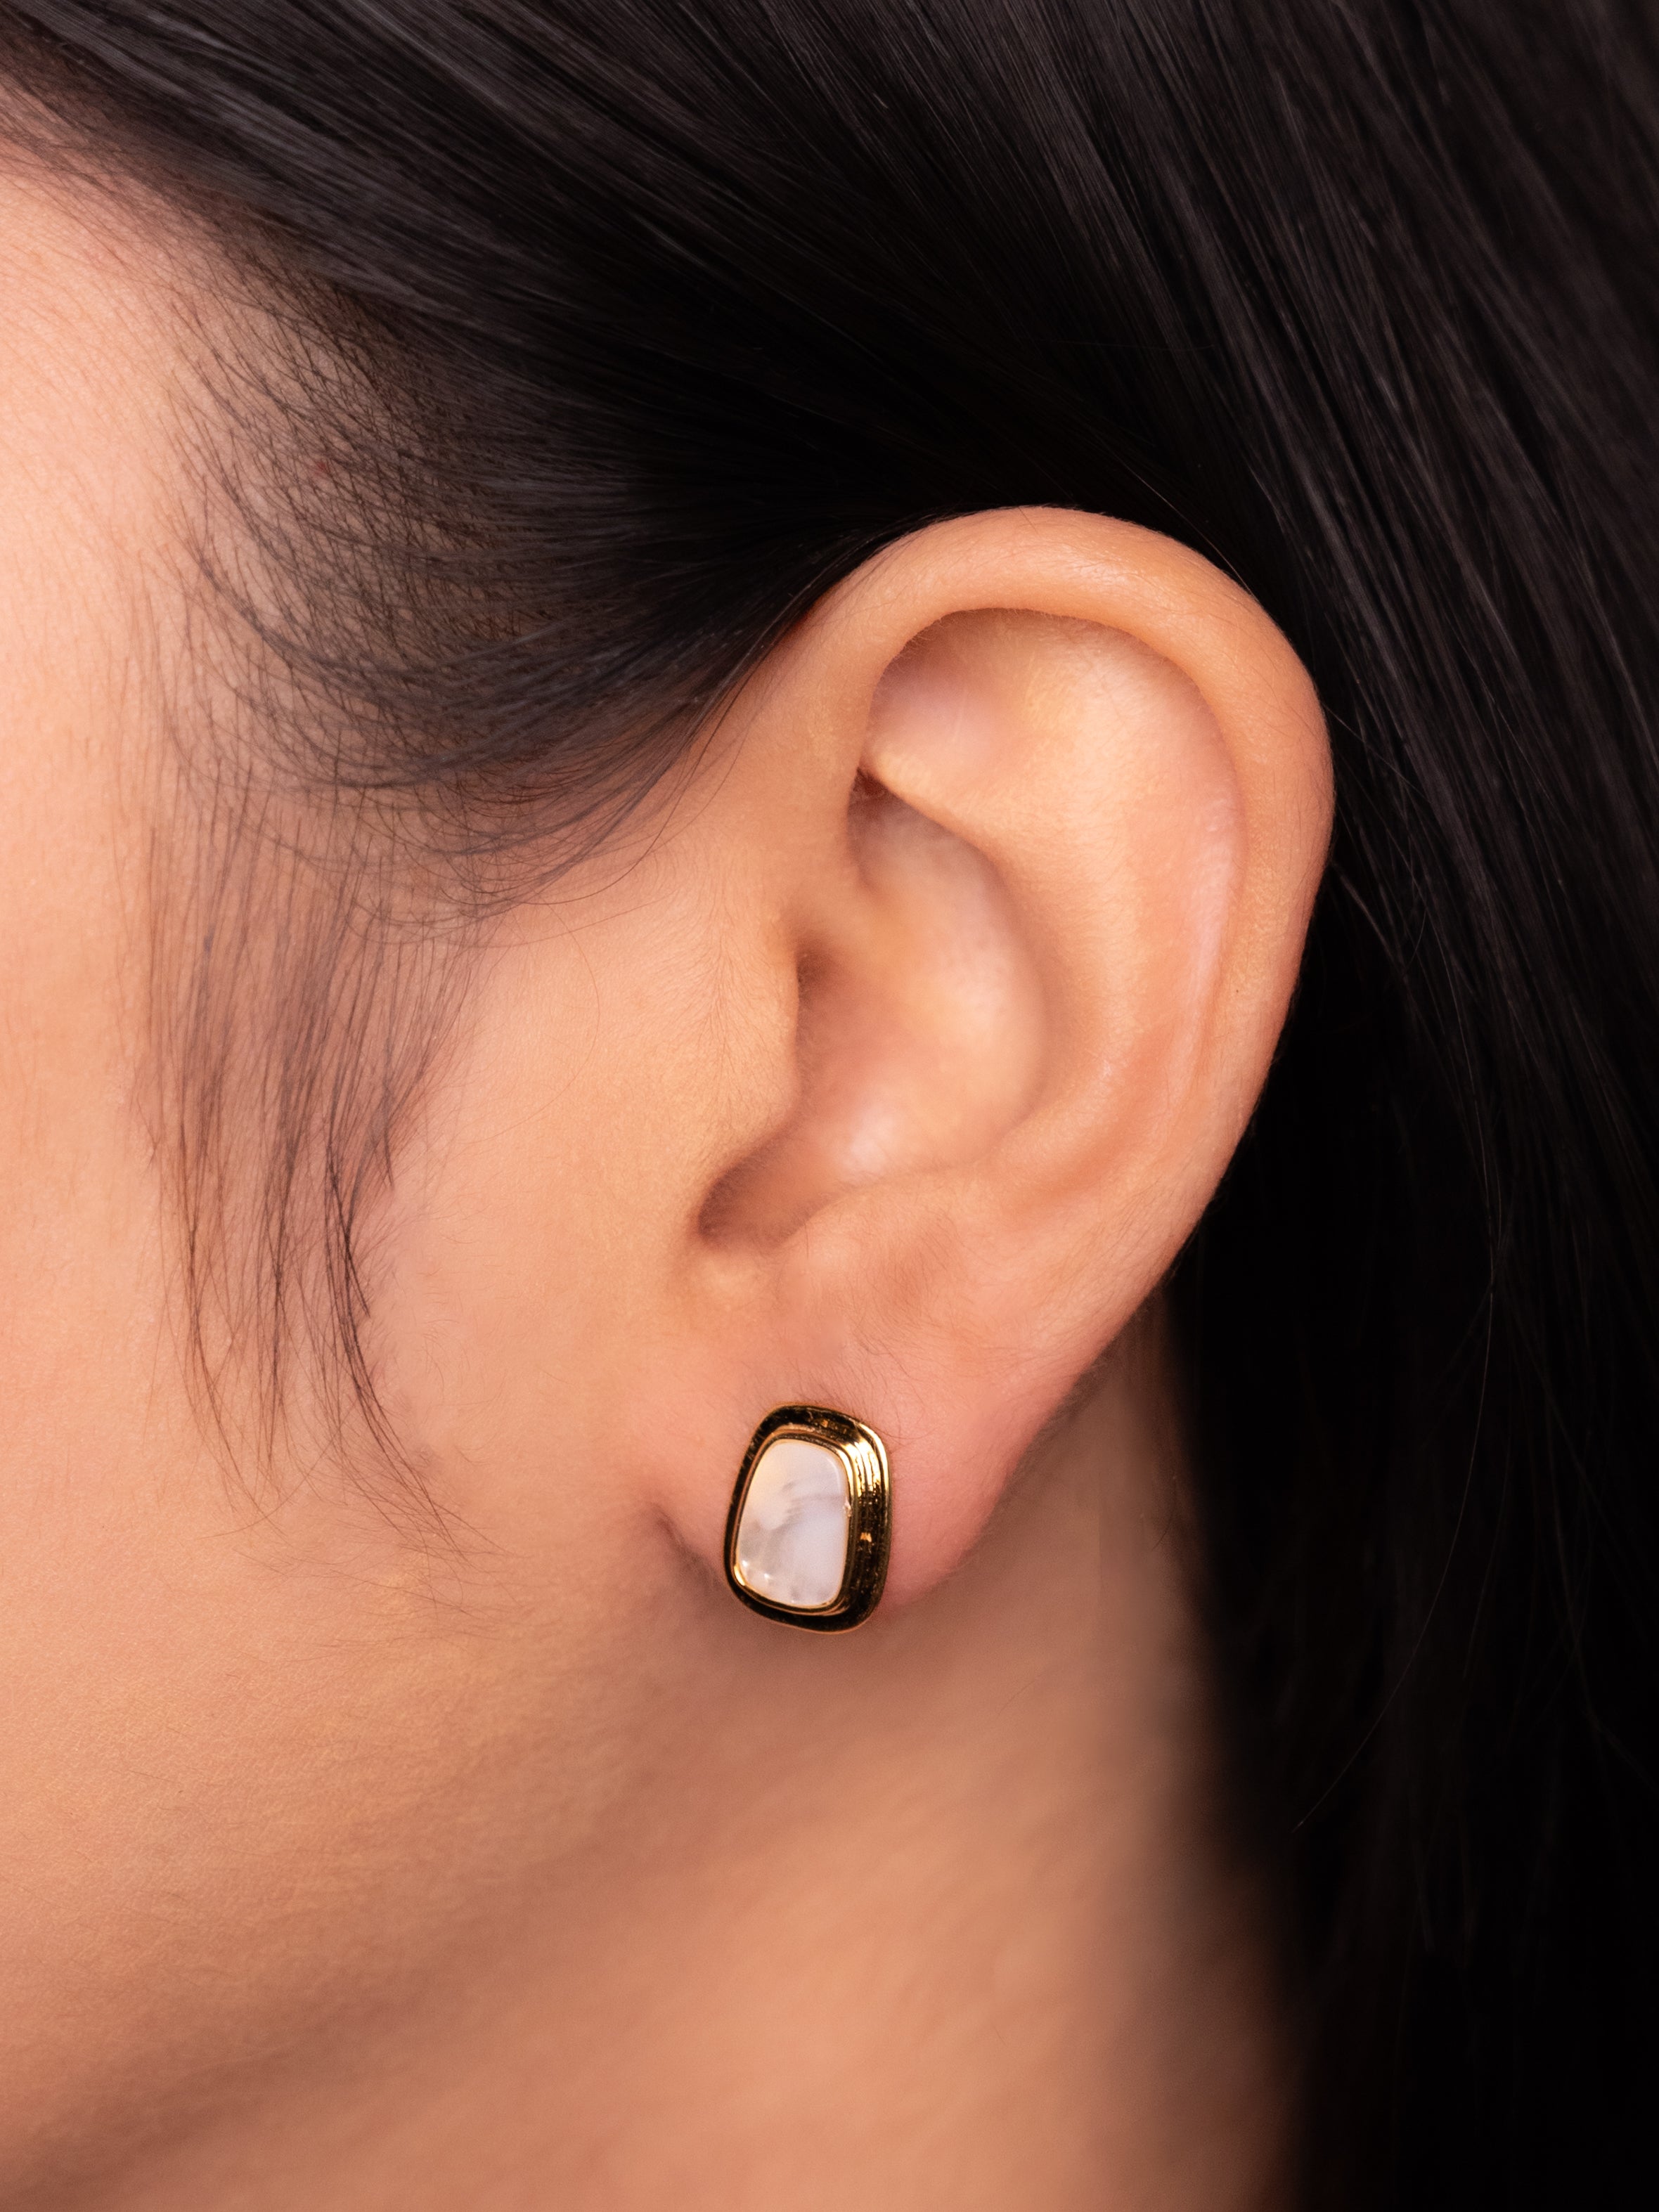 Pebble Pearl Studs Earrings | 18k Gold Plated